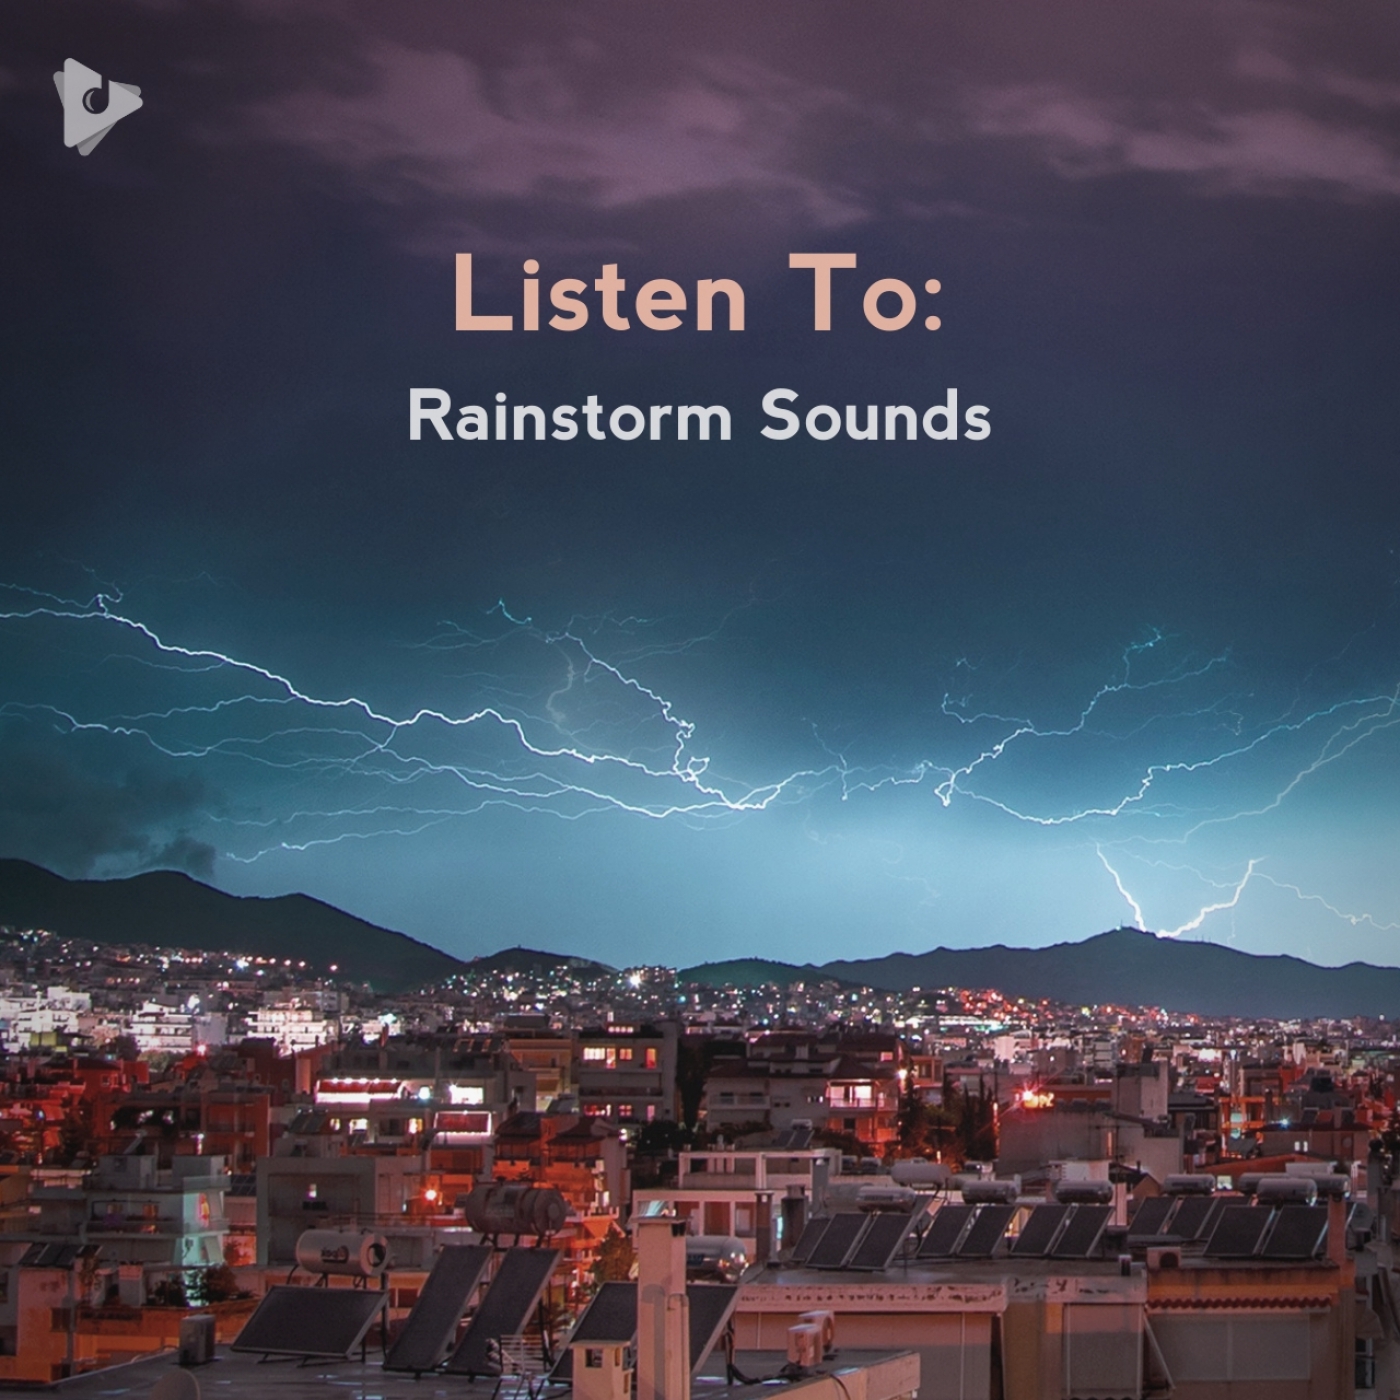 Listen To: Rainstorm Sounds